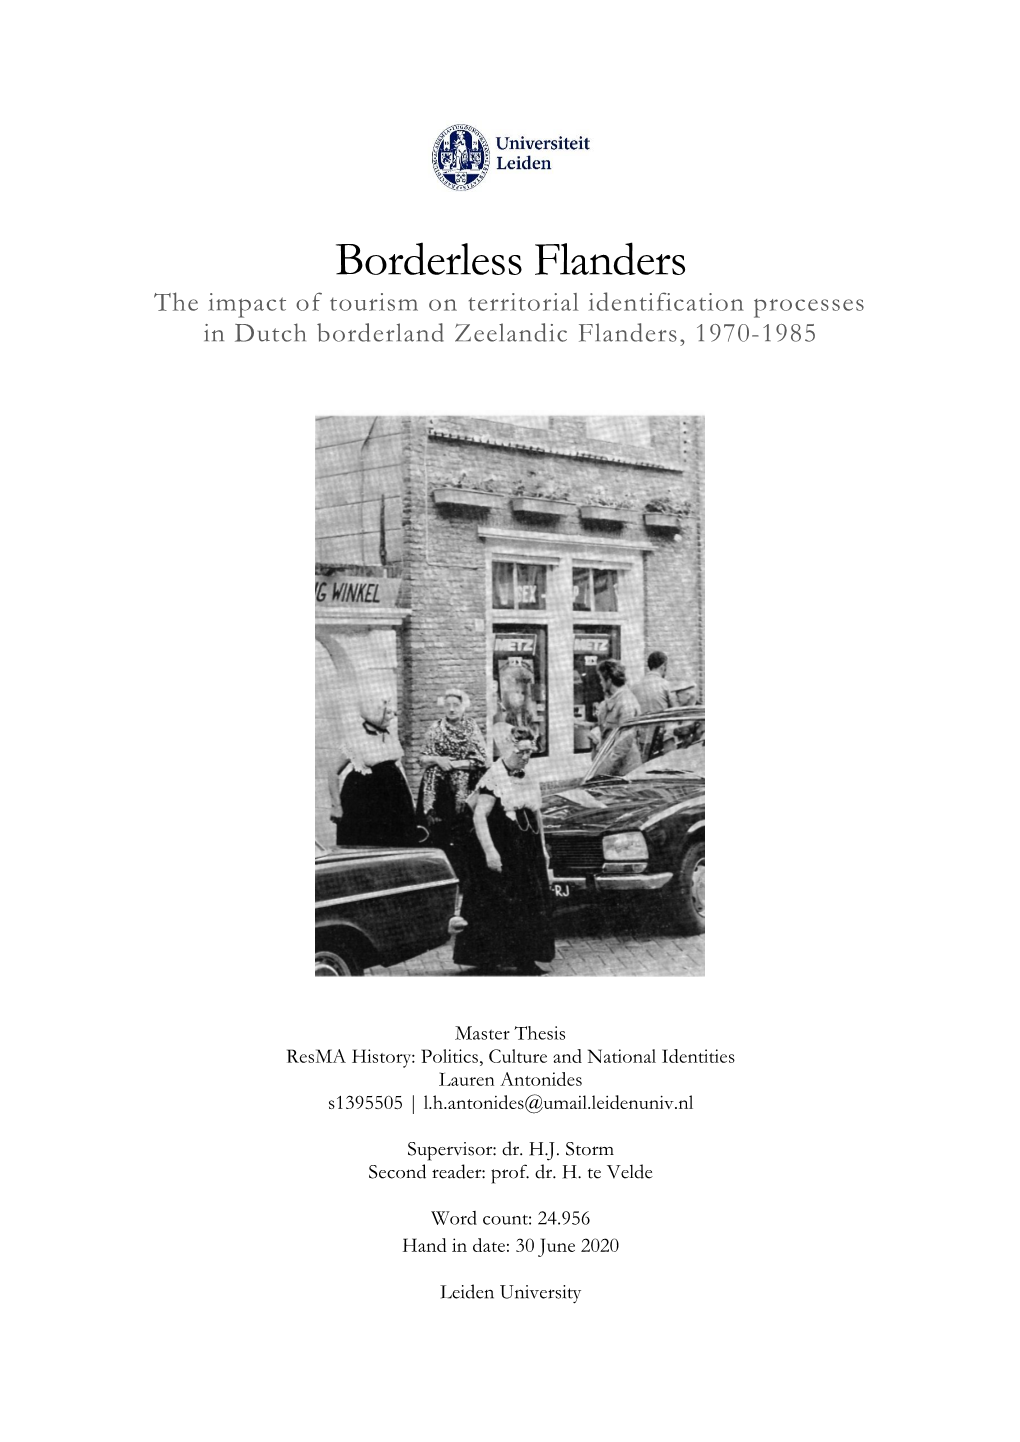 Borderless Flanders the Impact of Tourism on Territorial Identification Processes in Dutch Borderland Zeelandic Flanders, 1970-1985